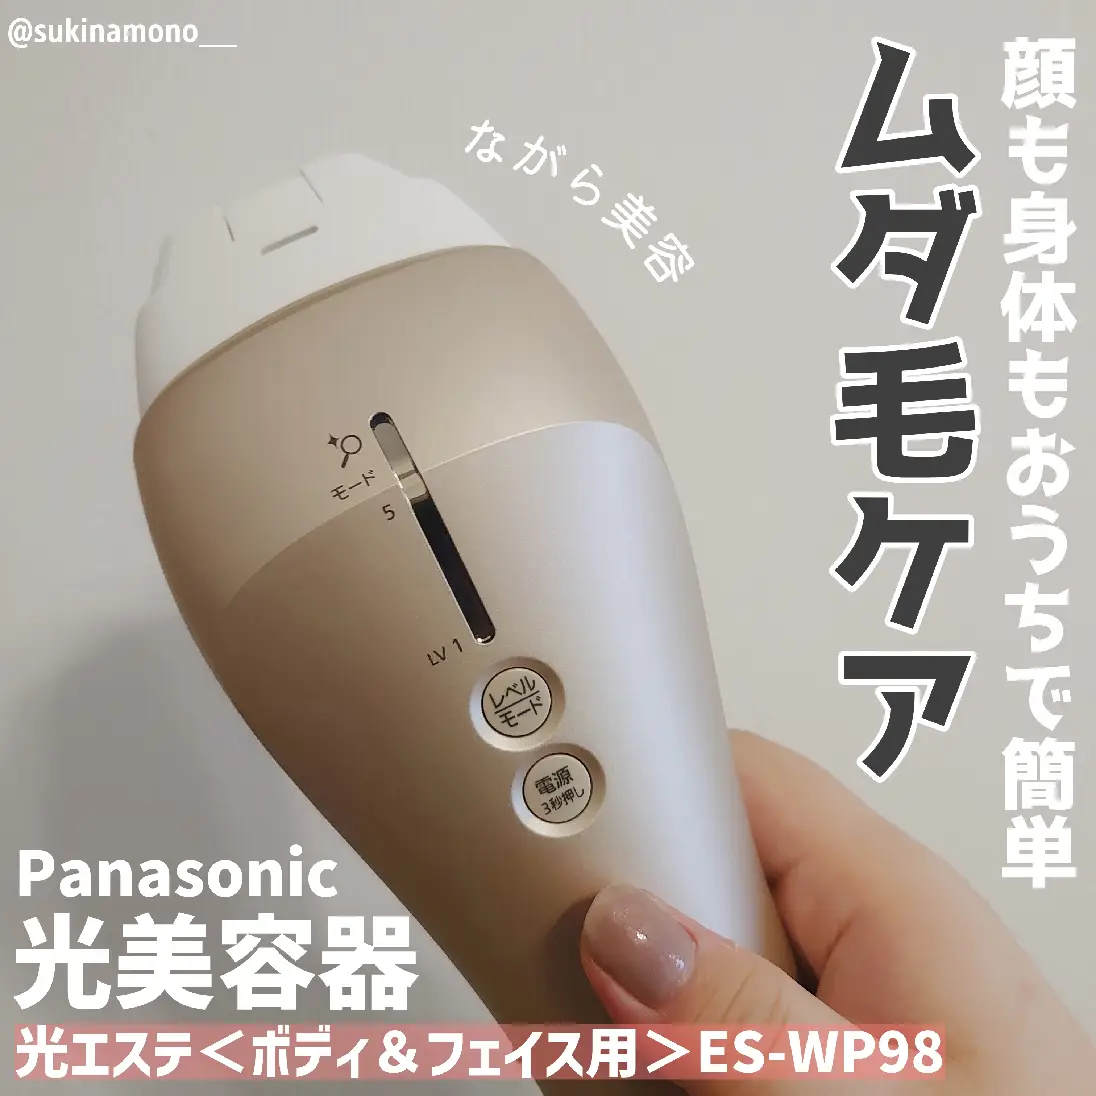 Panasonic 光美容器 ES-CWP97 - 美容機器